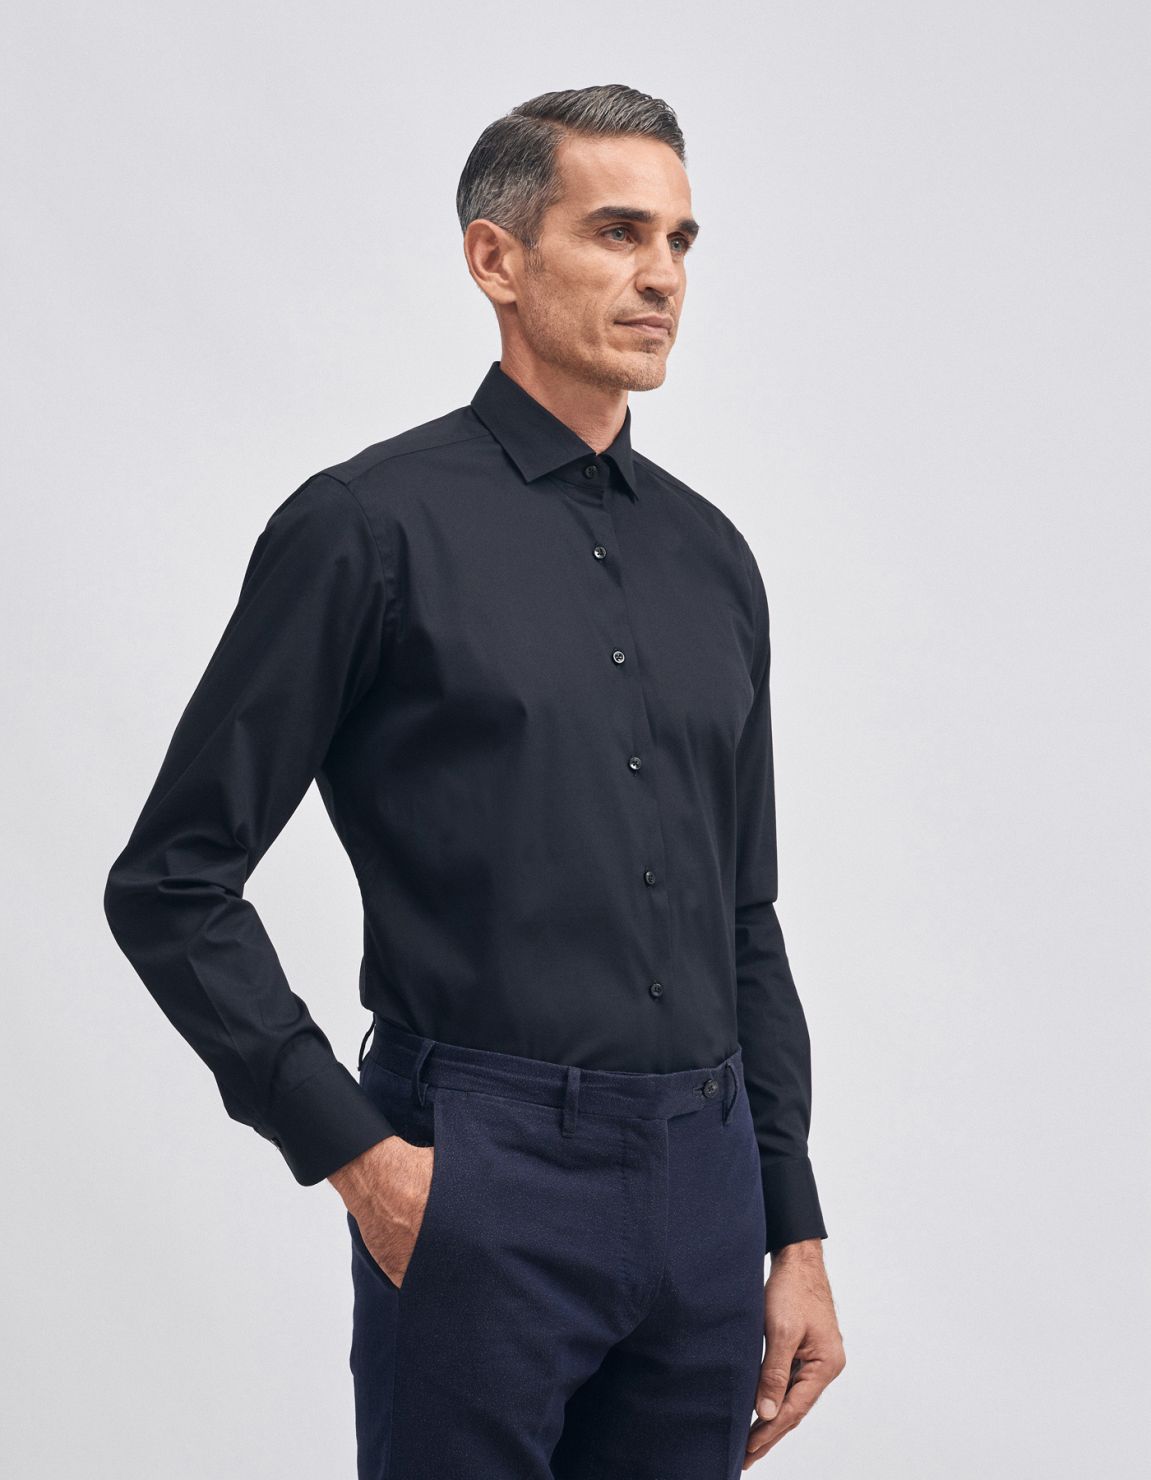 Shirt Collar small cutaway Black Canvas Tailor Custom Fit 1